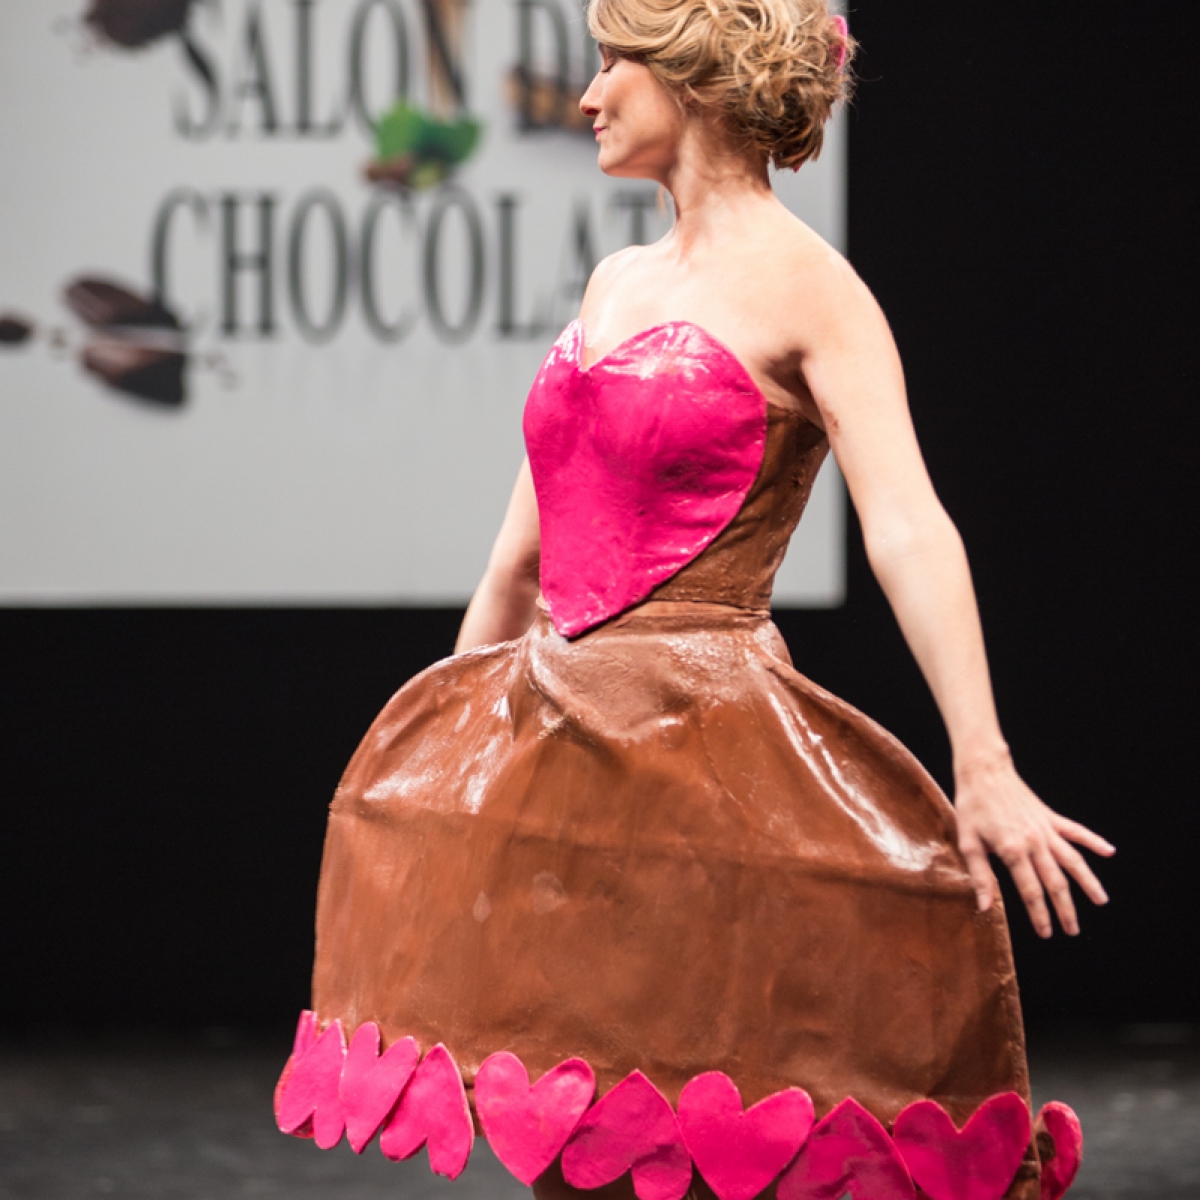 Sandrine Arcizet du salon du chocolat marwan moussa